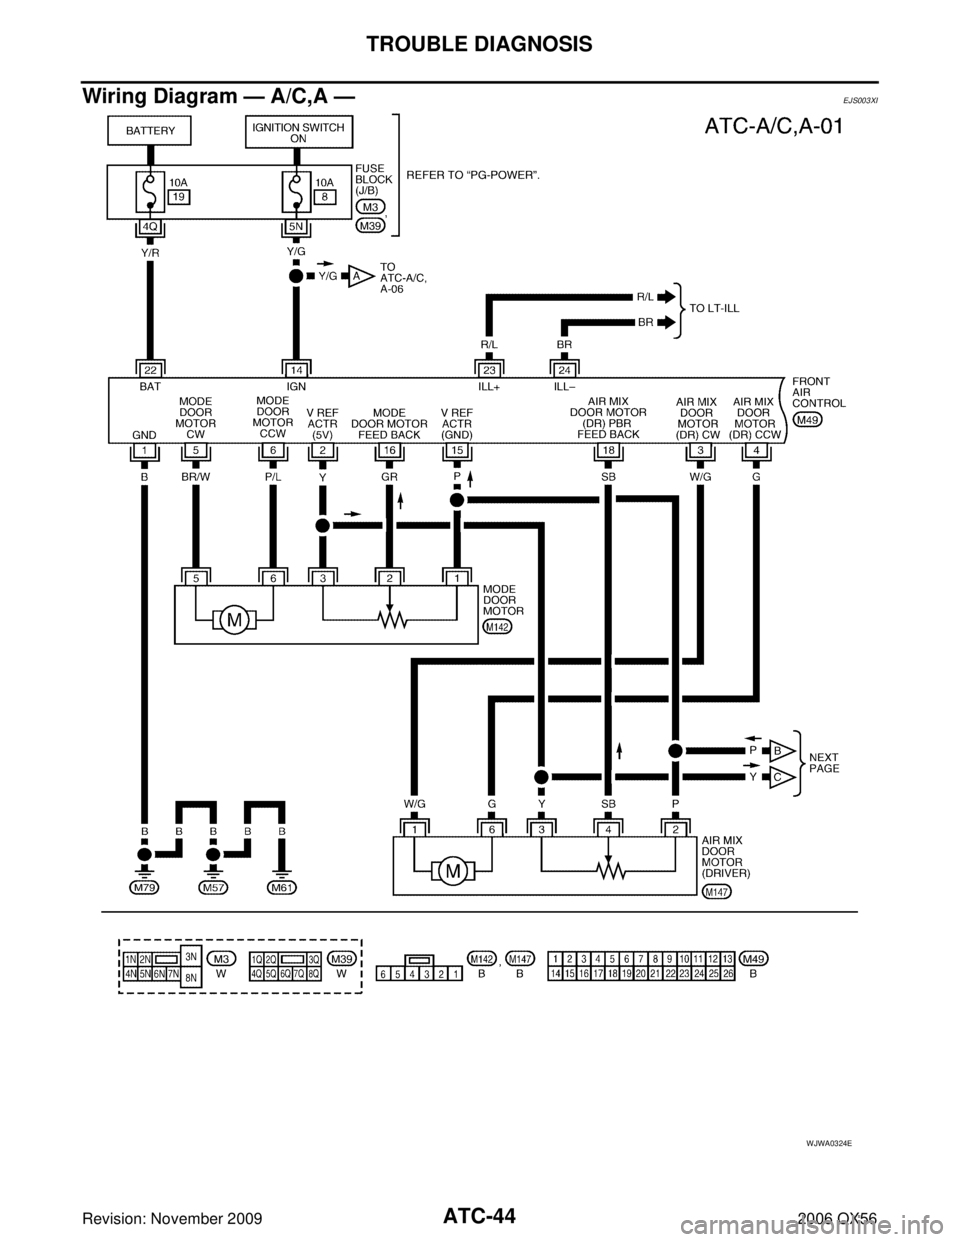 INFINITI QX56 2006  Factory User Guide ATC-44
TROUBLE DIAGNOSIS
Revision: November 20092006 QX56
Wiring Diagram — A/C,A —EJS003XI
WJWA0324E 